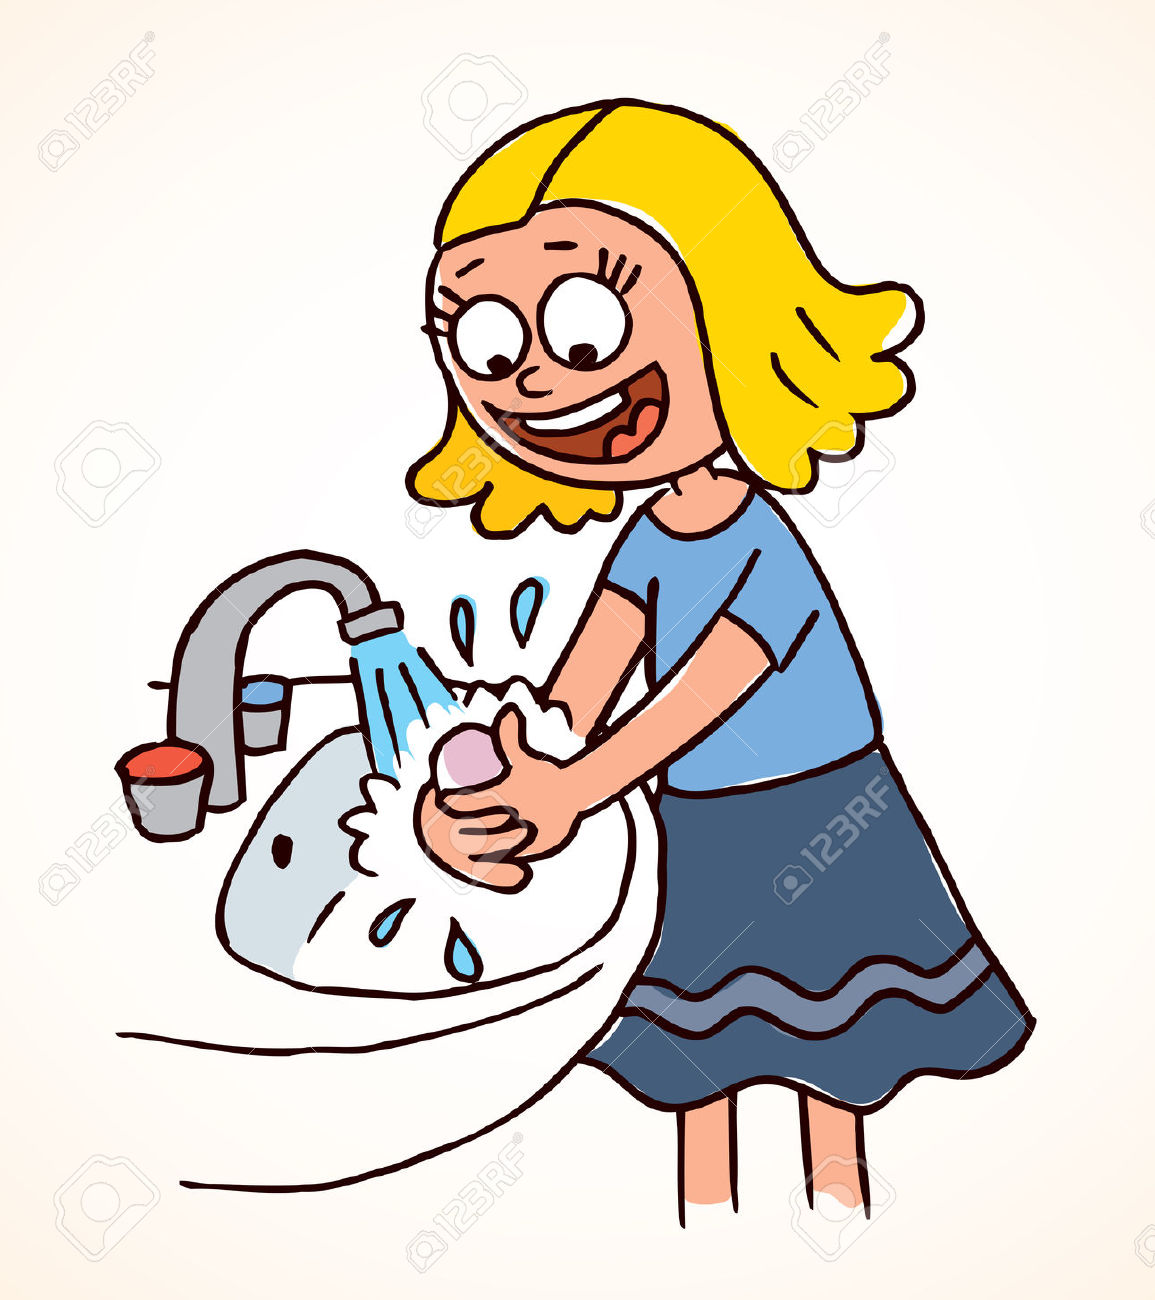 Washing Hands Clipart - clipa